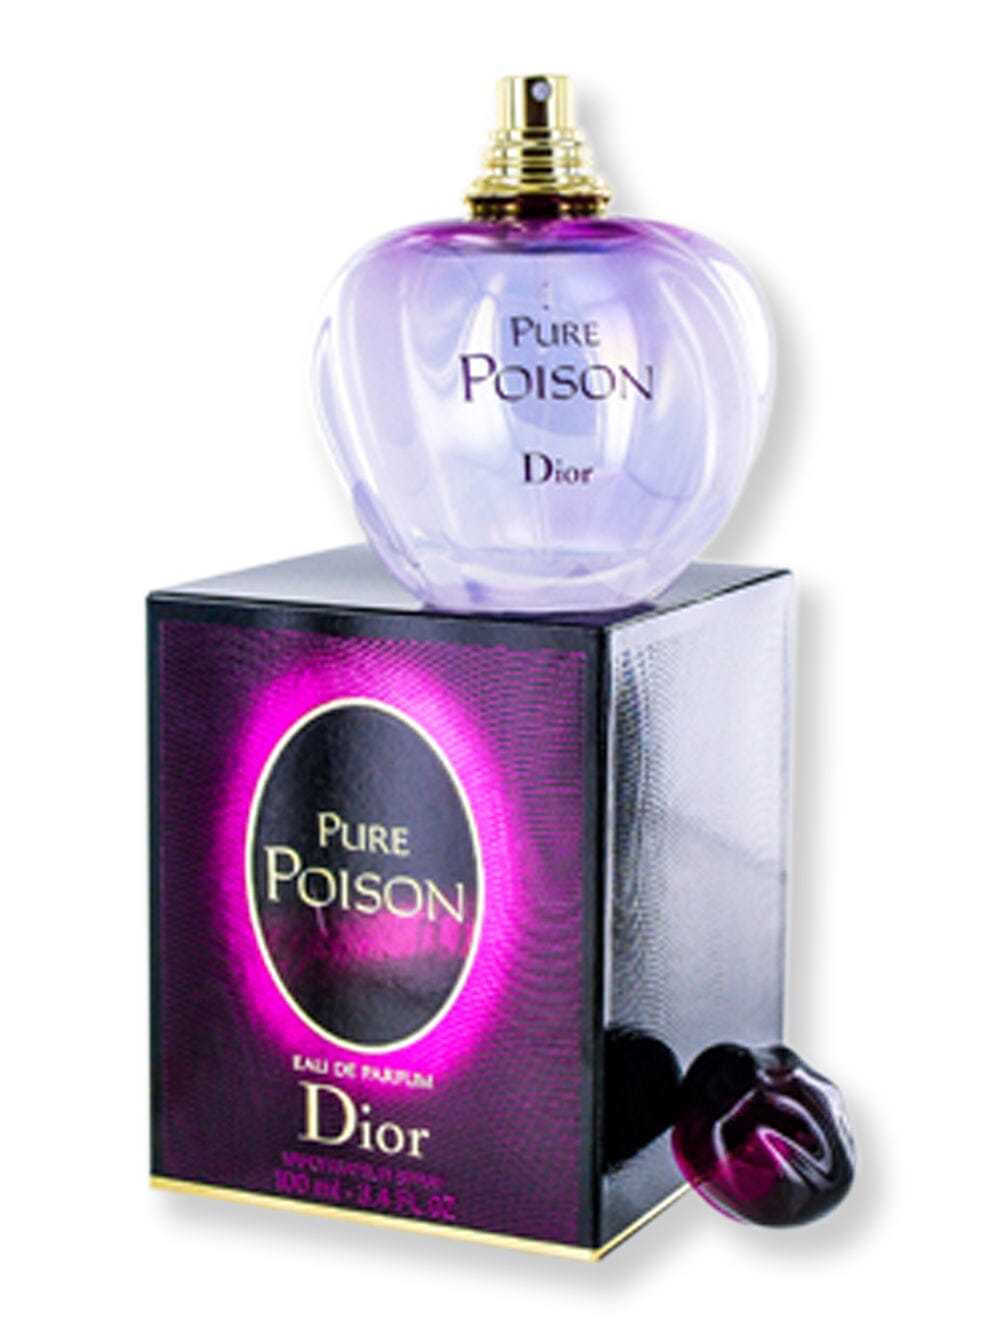 Dior Dior Pure Poison EDP Spray 3.4 oz Perfume 